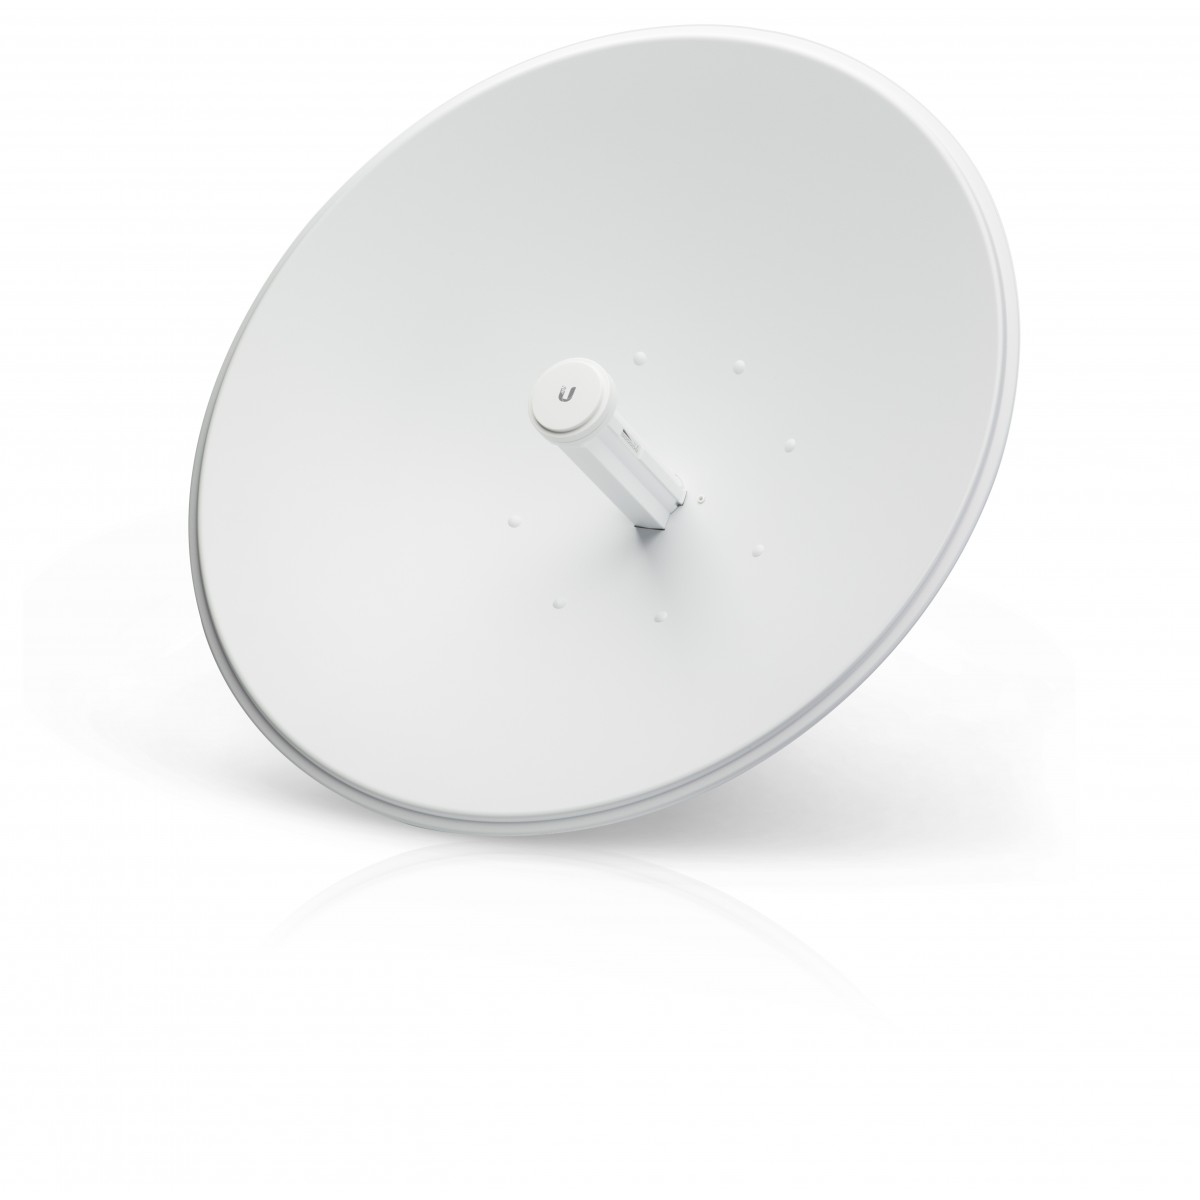 UbiQuiti Networks PBE-M5-620 - 29 dBi - 5 GHz - Sector antenna - Dual polarization - 8.5 W - White